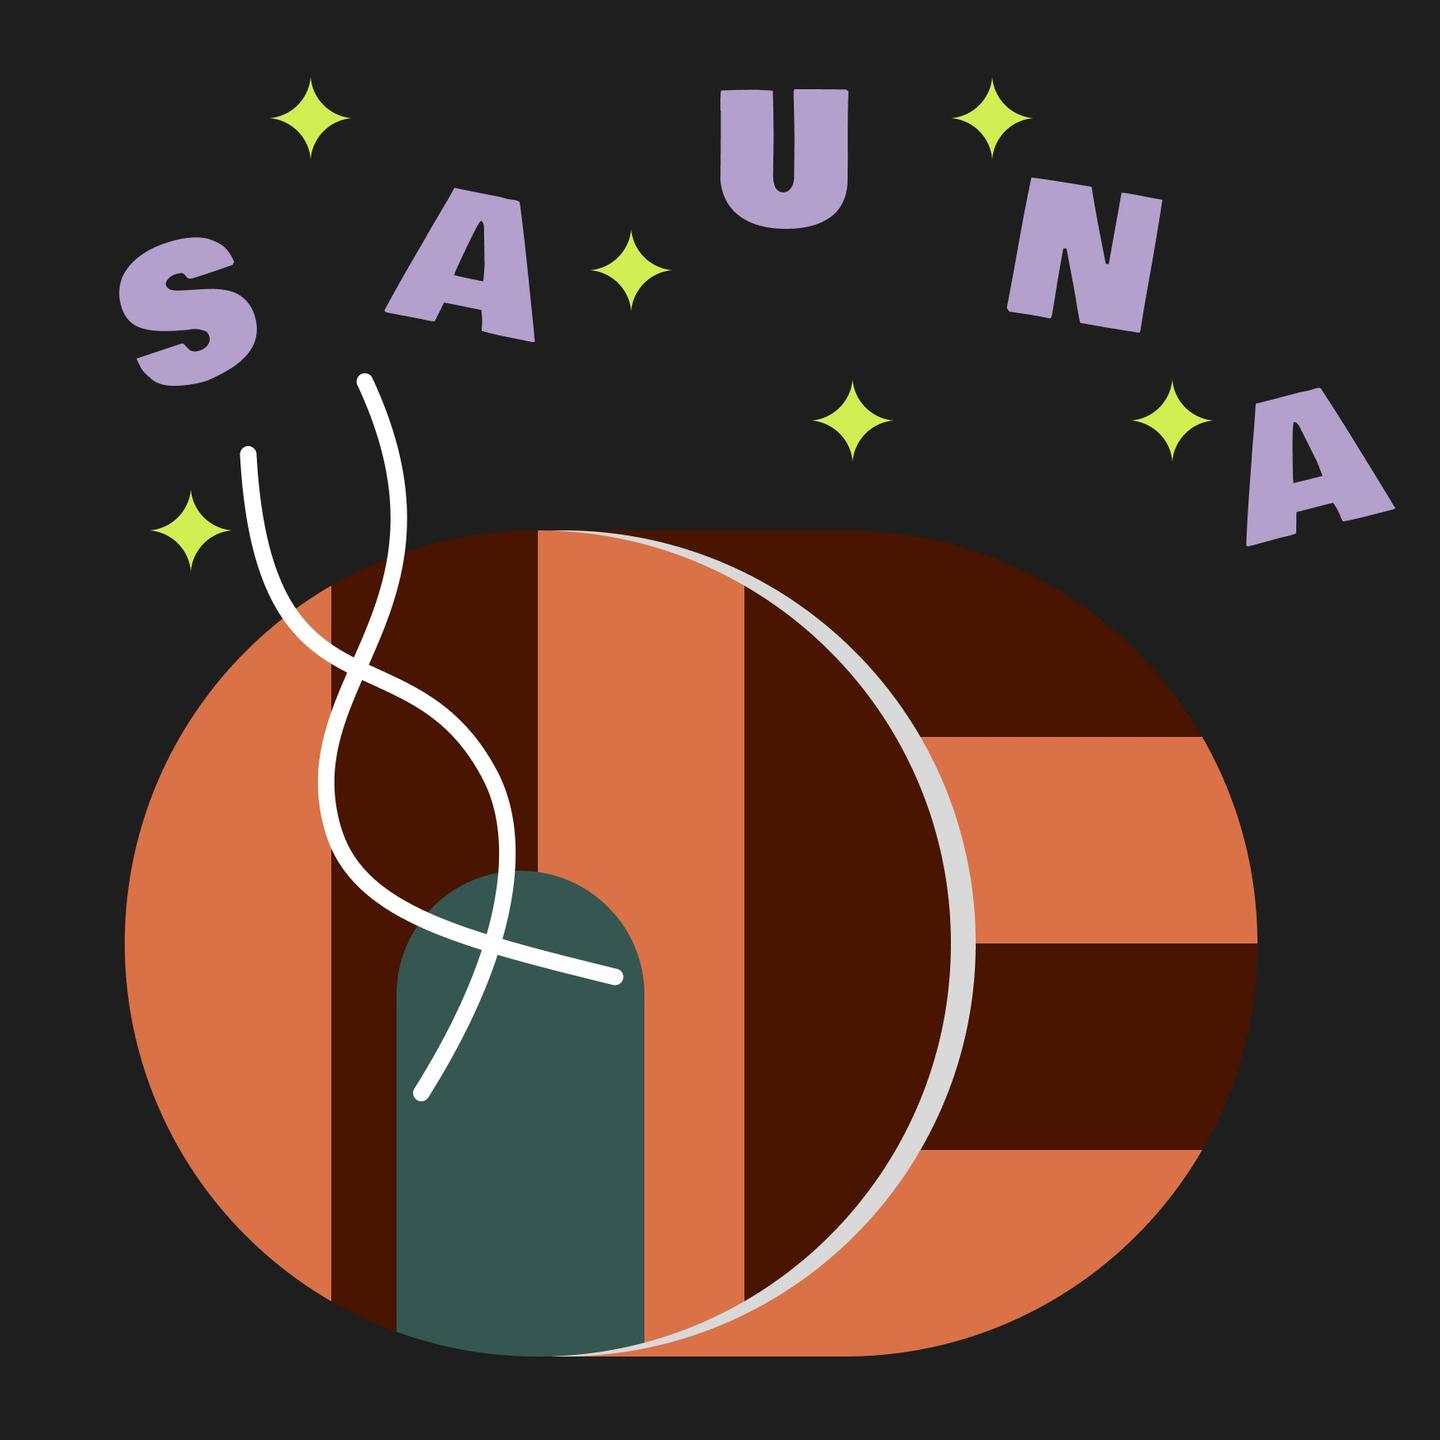 Saunabound: Steaming Ahead